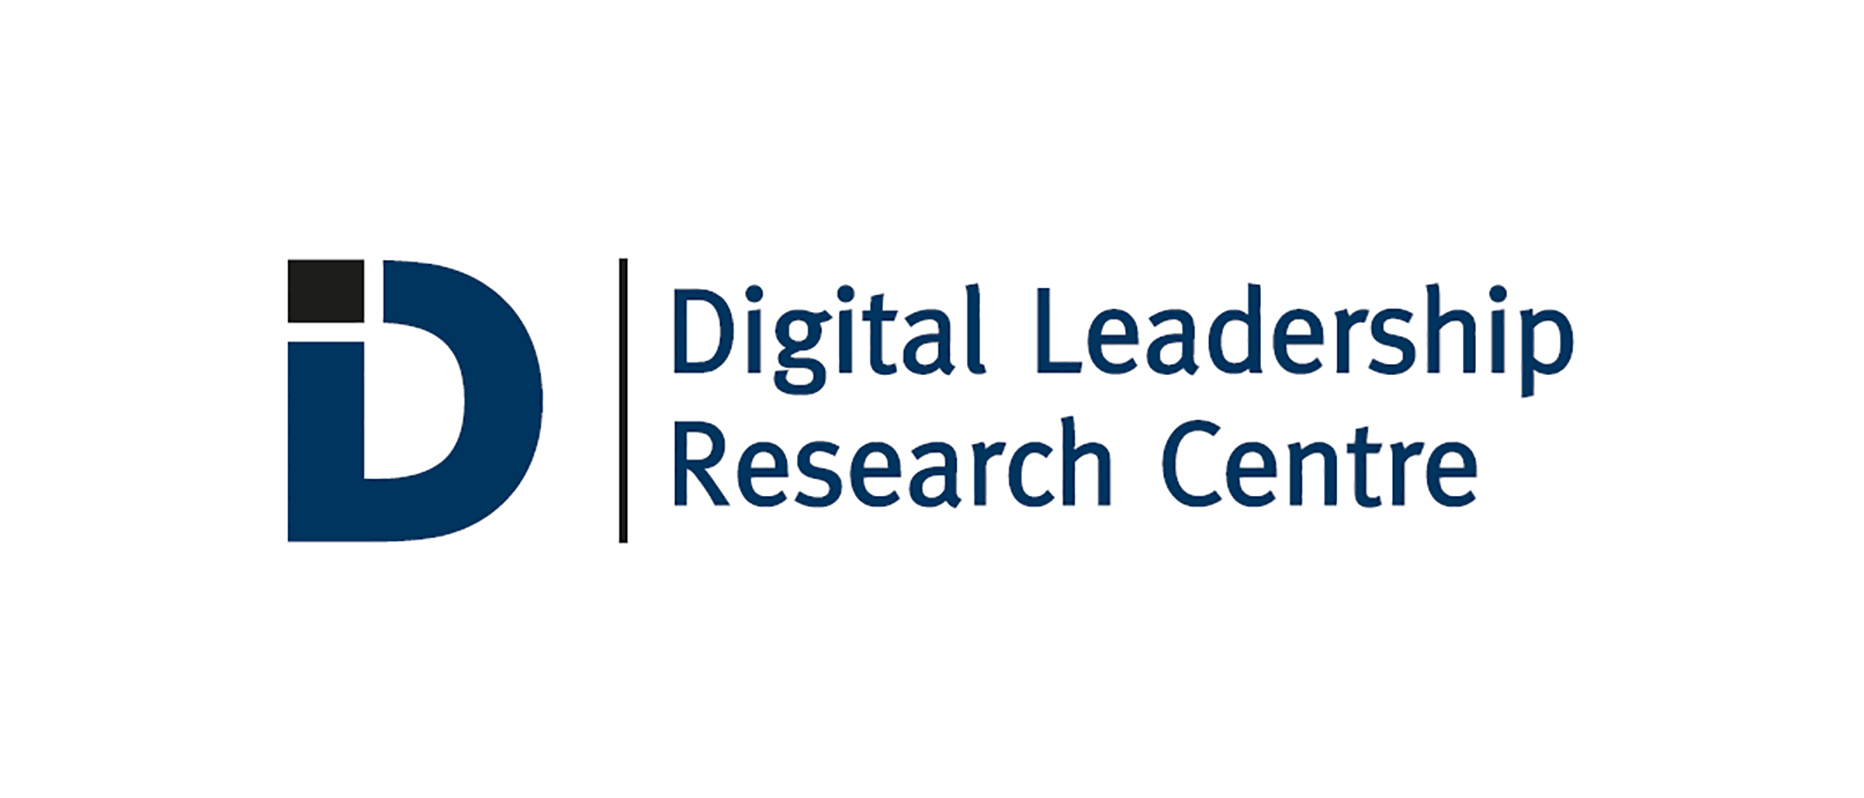 Digital Leadership Research Centre logo